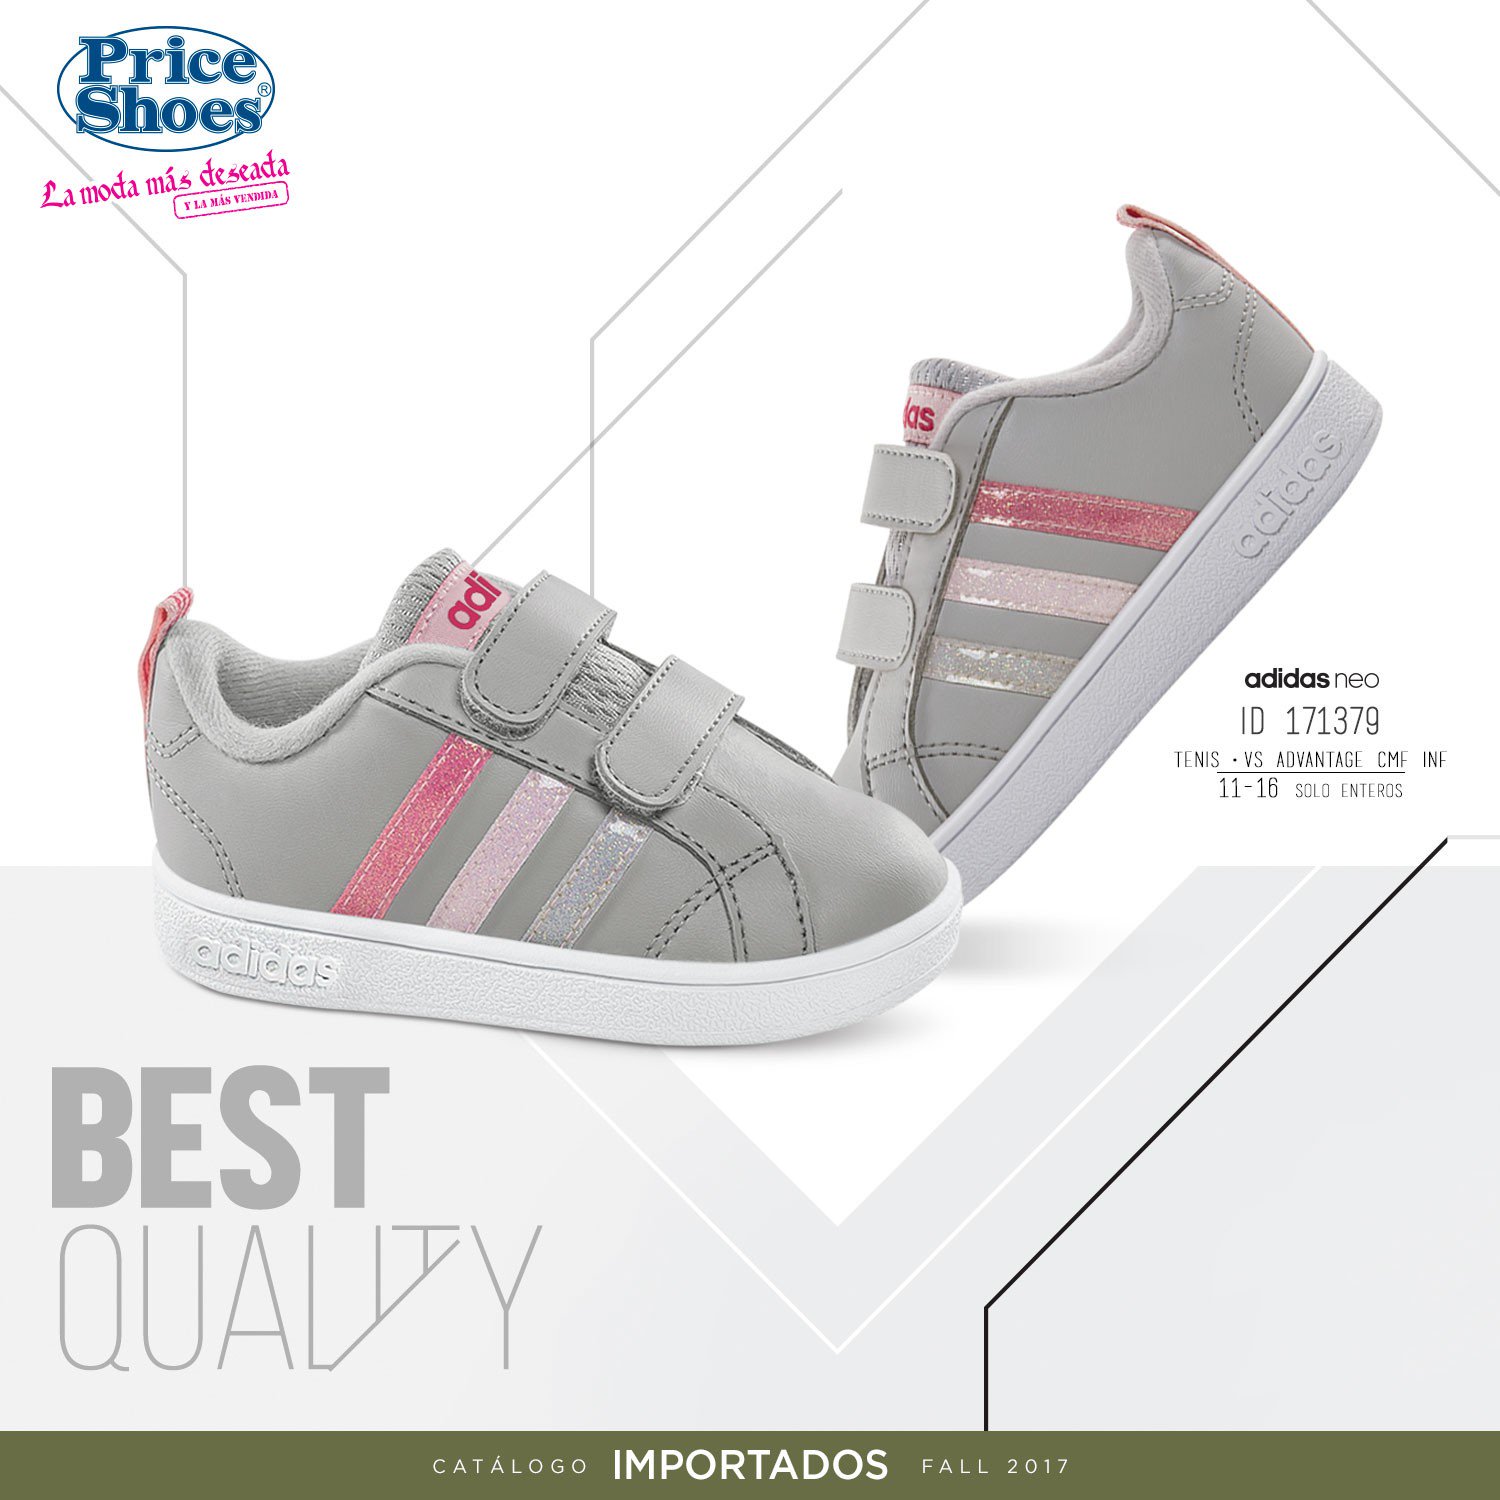 Twitter 上的 Shoes："Adidas Neo Kid's Apoya a tu a alcanzar sus metas !! #NenasLindasPriceShoes 👧👟😉 Encuentralos aquí → https://t.co/lFezbZGjfG https://t.co/sNc10OptxR" /